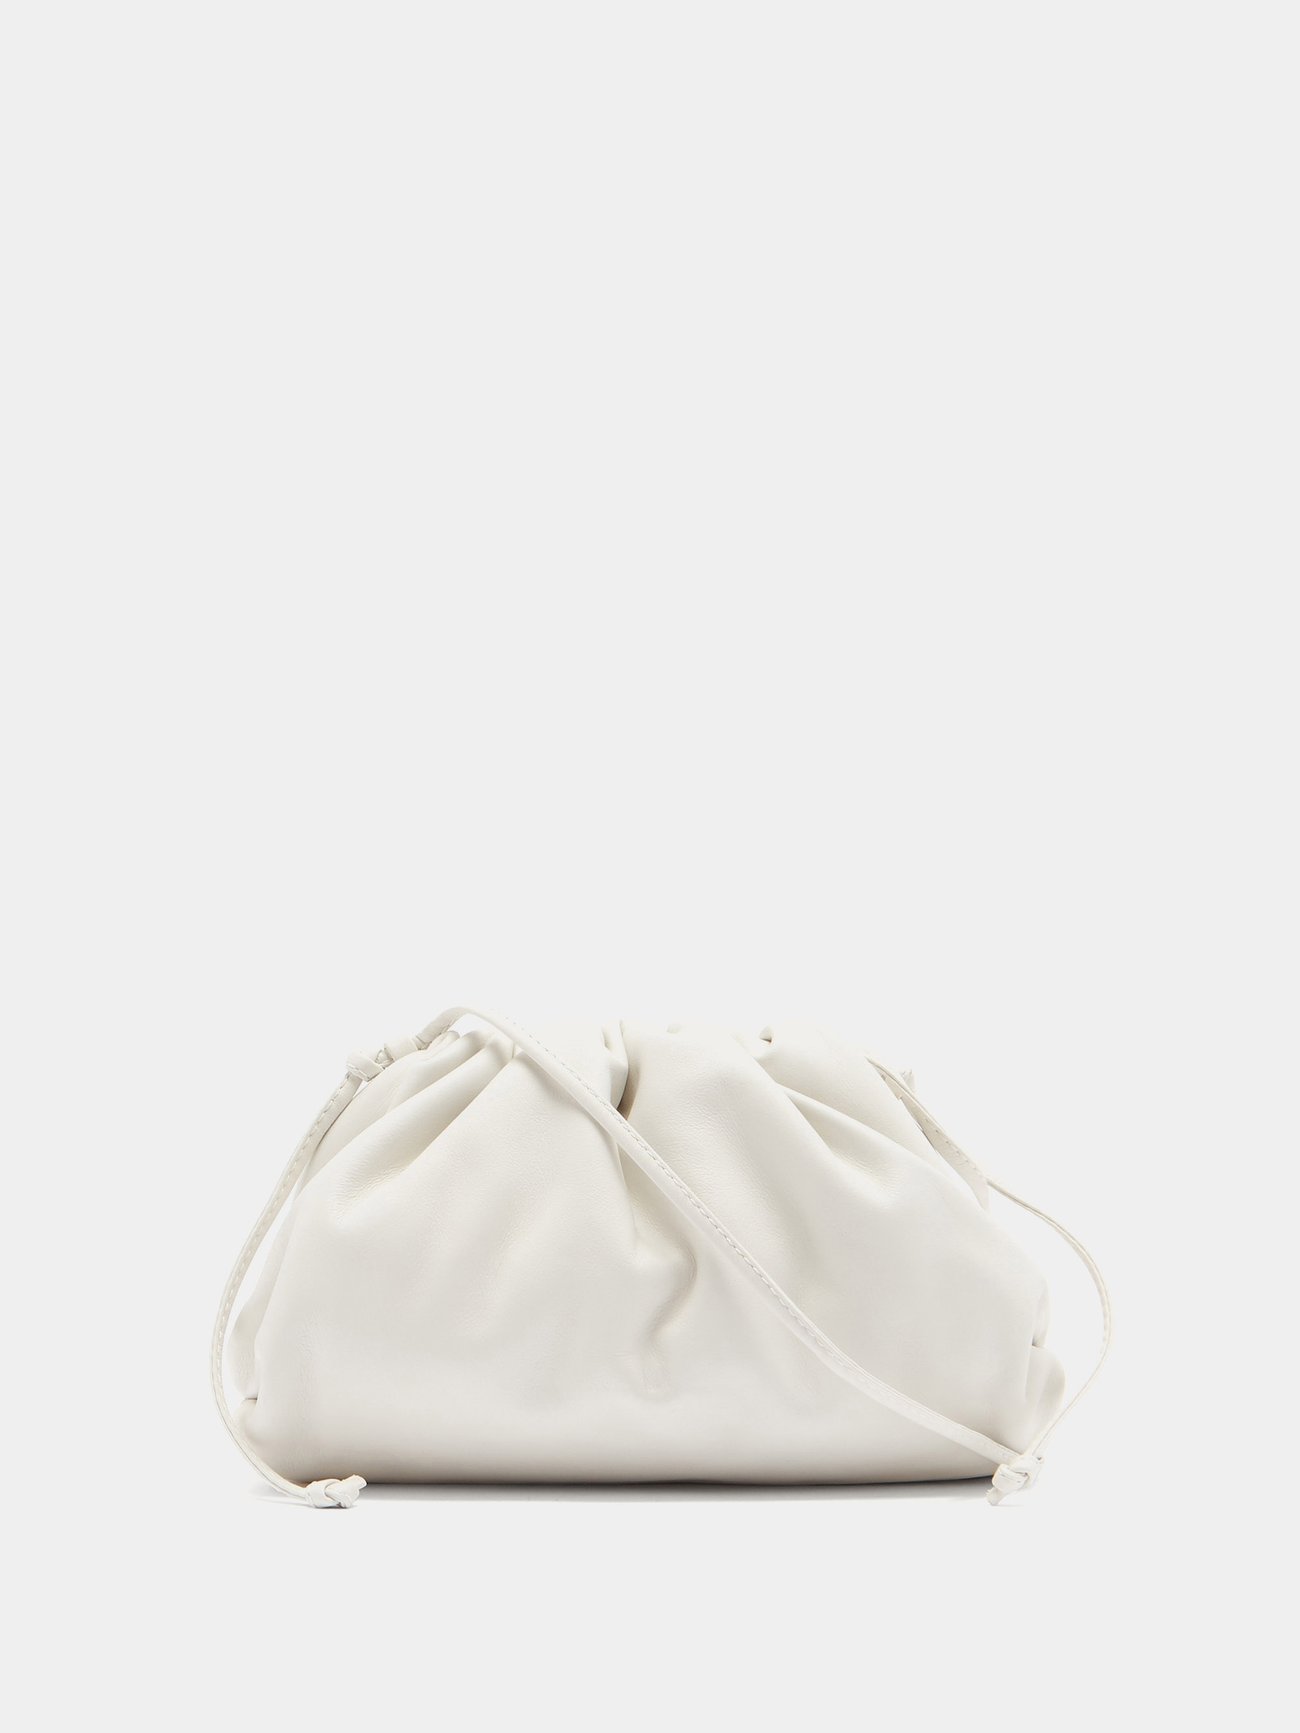 GHIME Women Glitter Evening Clutch Ladies Party Wedding Purse Bag (White) :  Amazon.in: Fashion